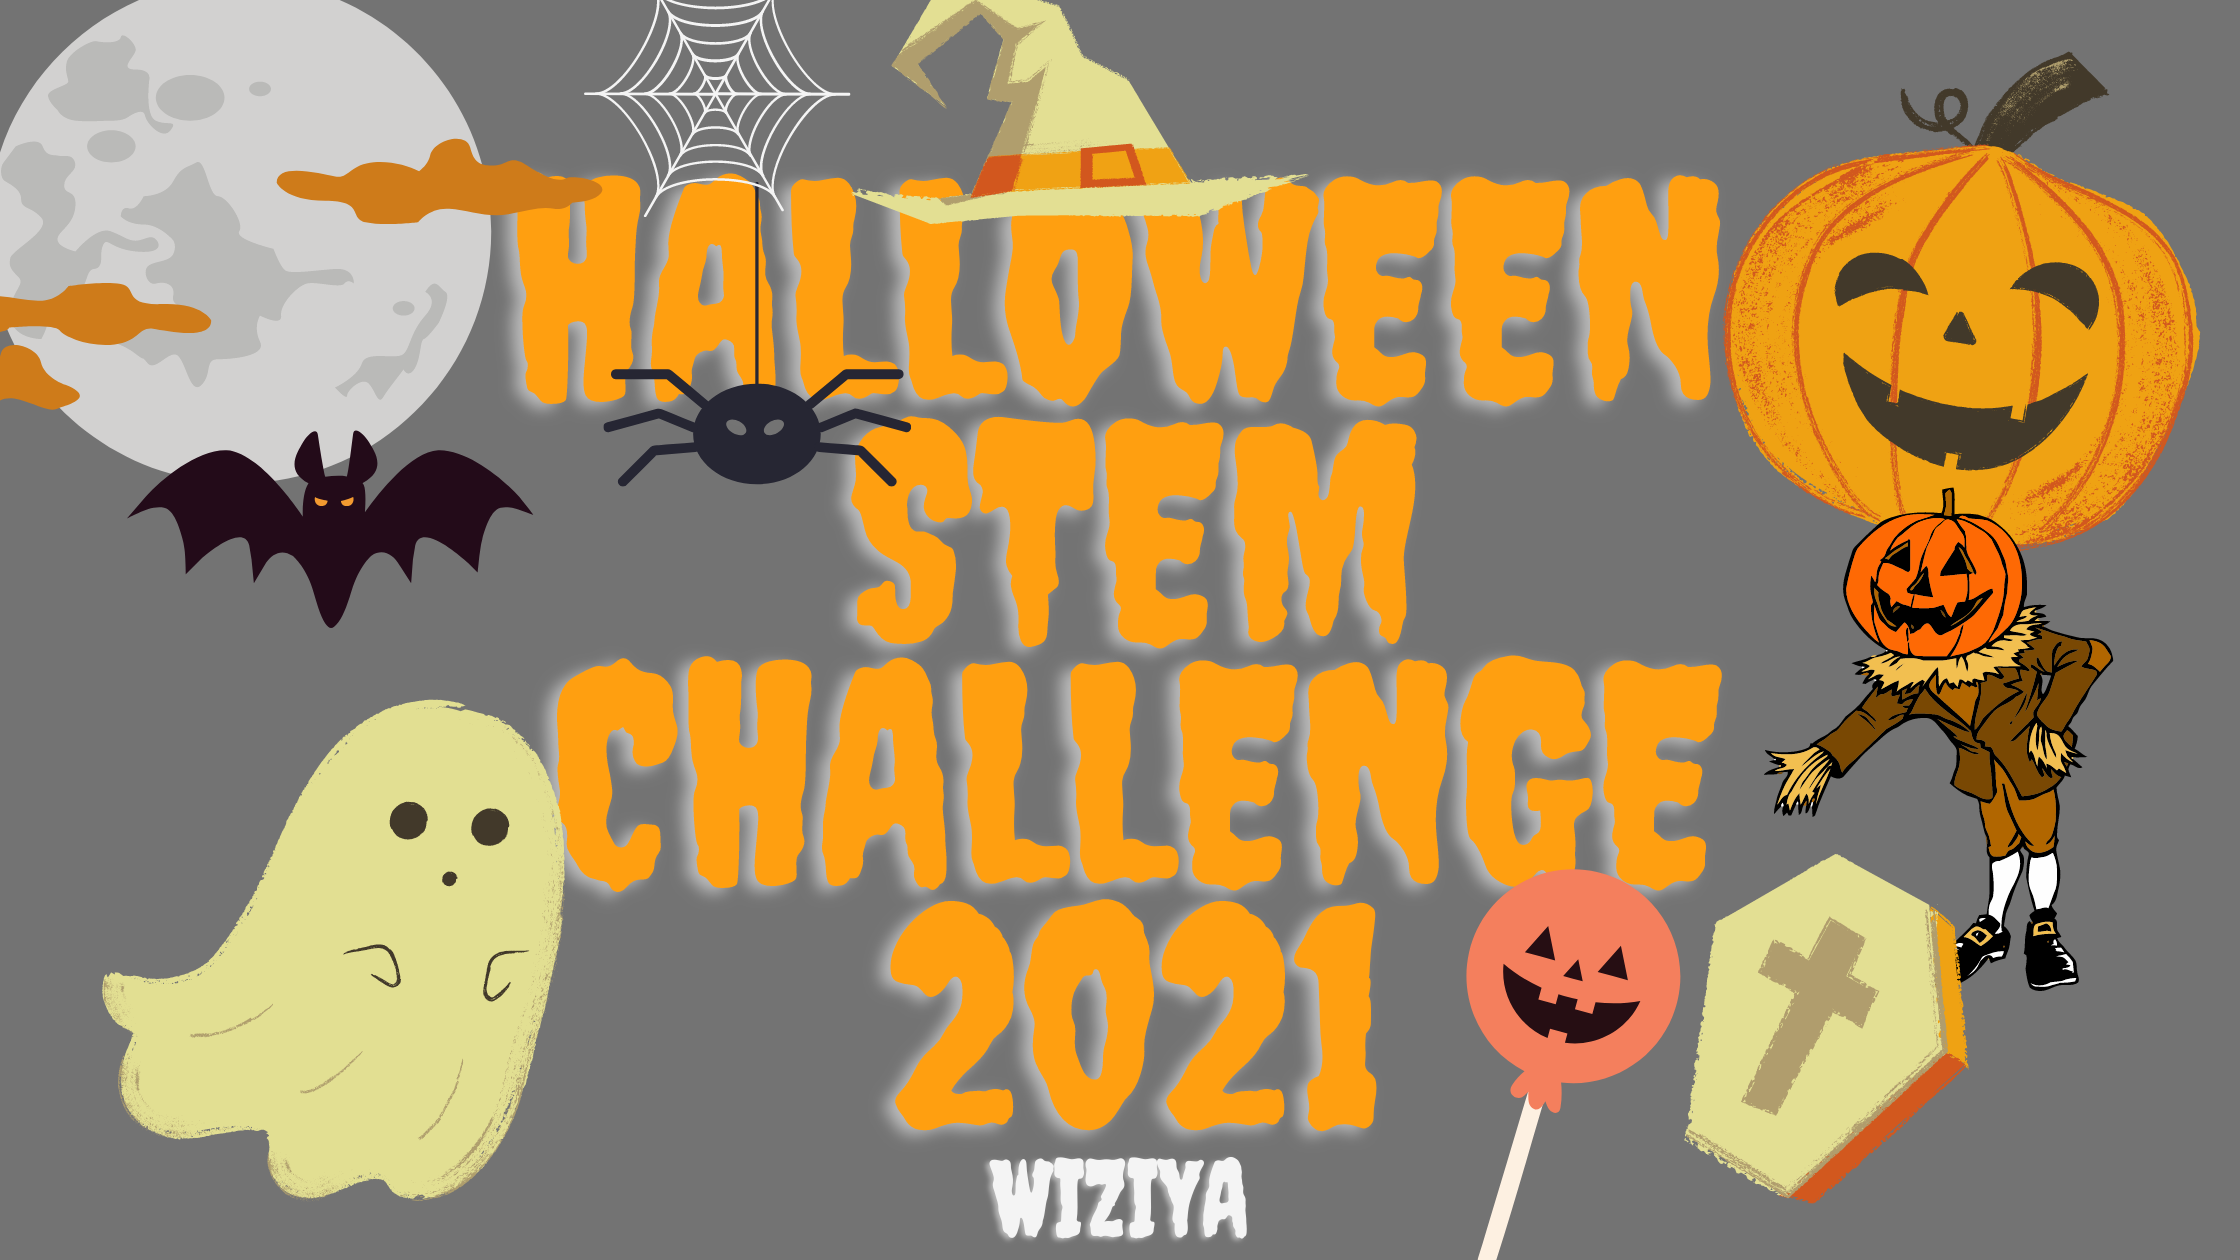 Halloween STEM challenge 2021